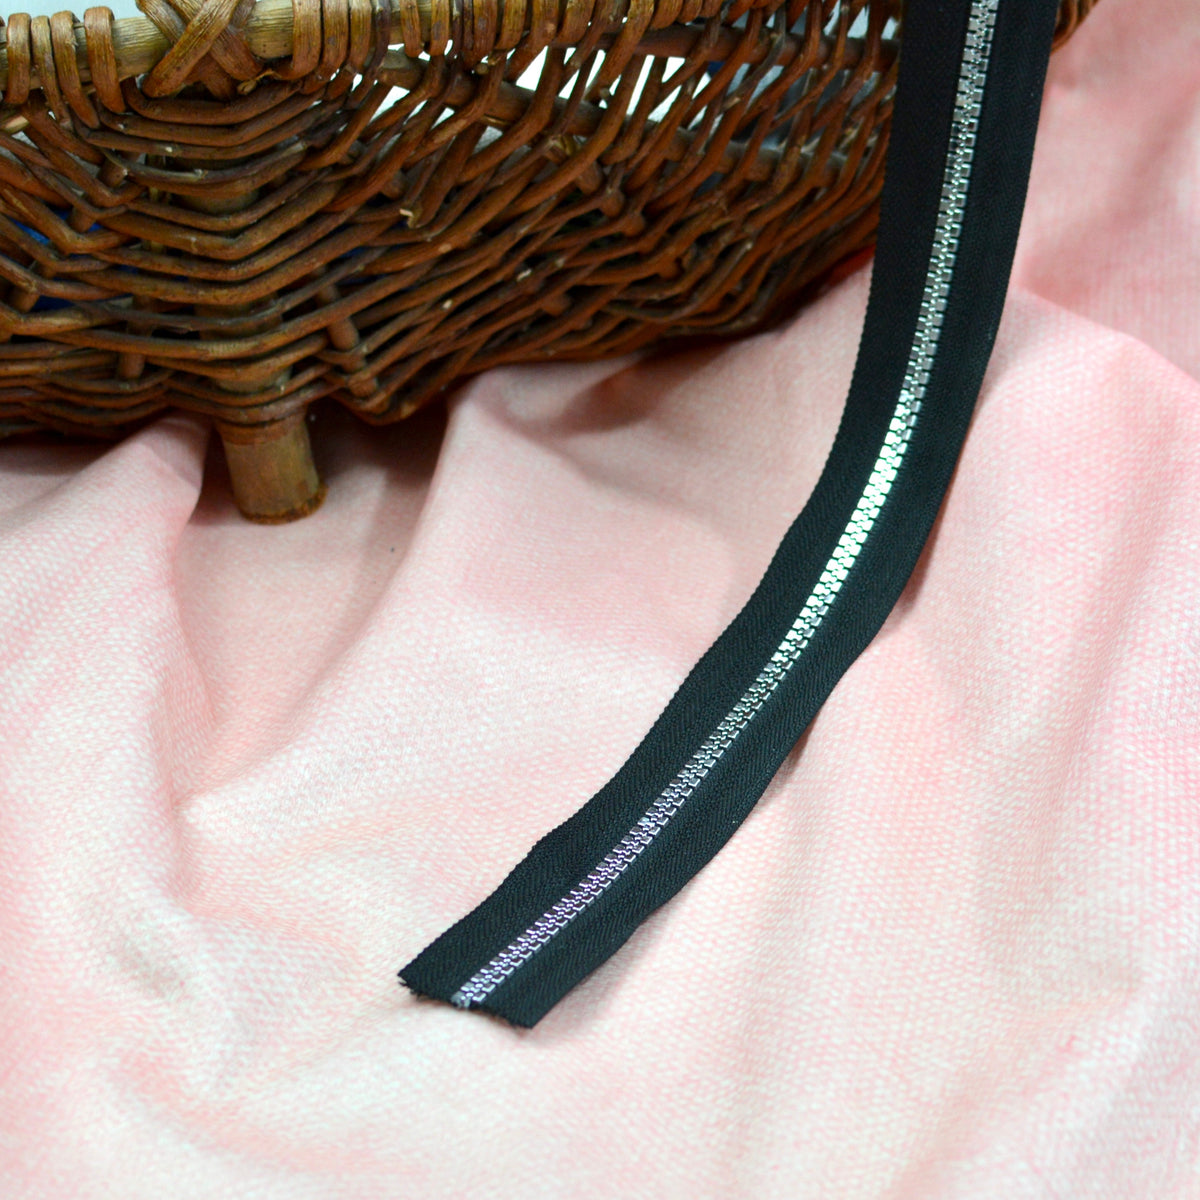 Endlosreißverschluss schwarz silber metallic - Meterware Fabric poshpinks